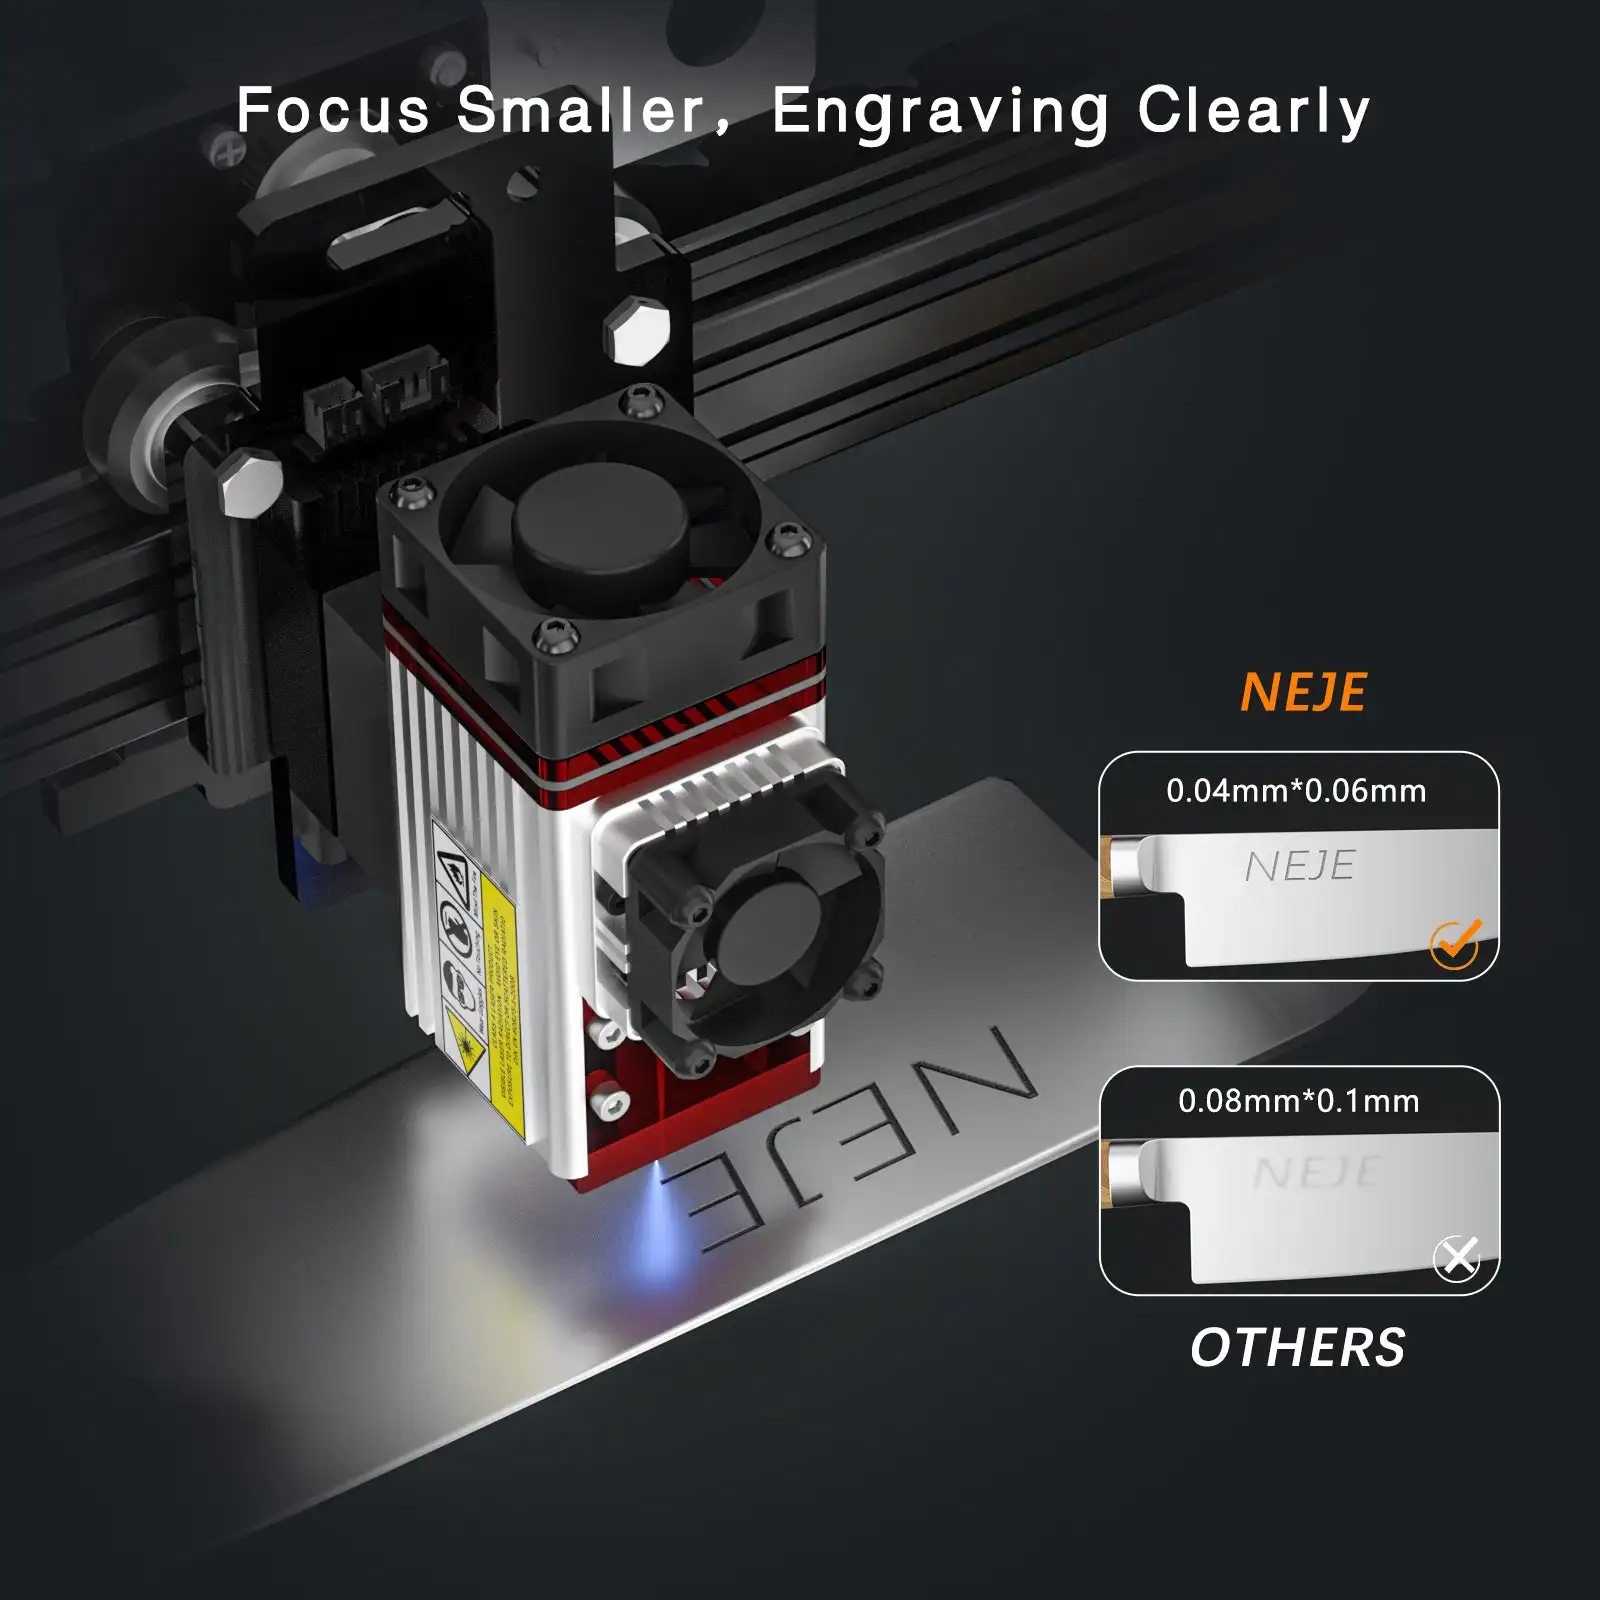 NEJE 3 PLUS Laser Engraver With Lightburn | Wireless Control Laser CNC